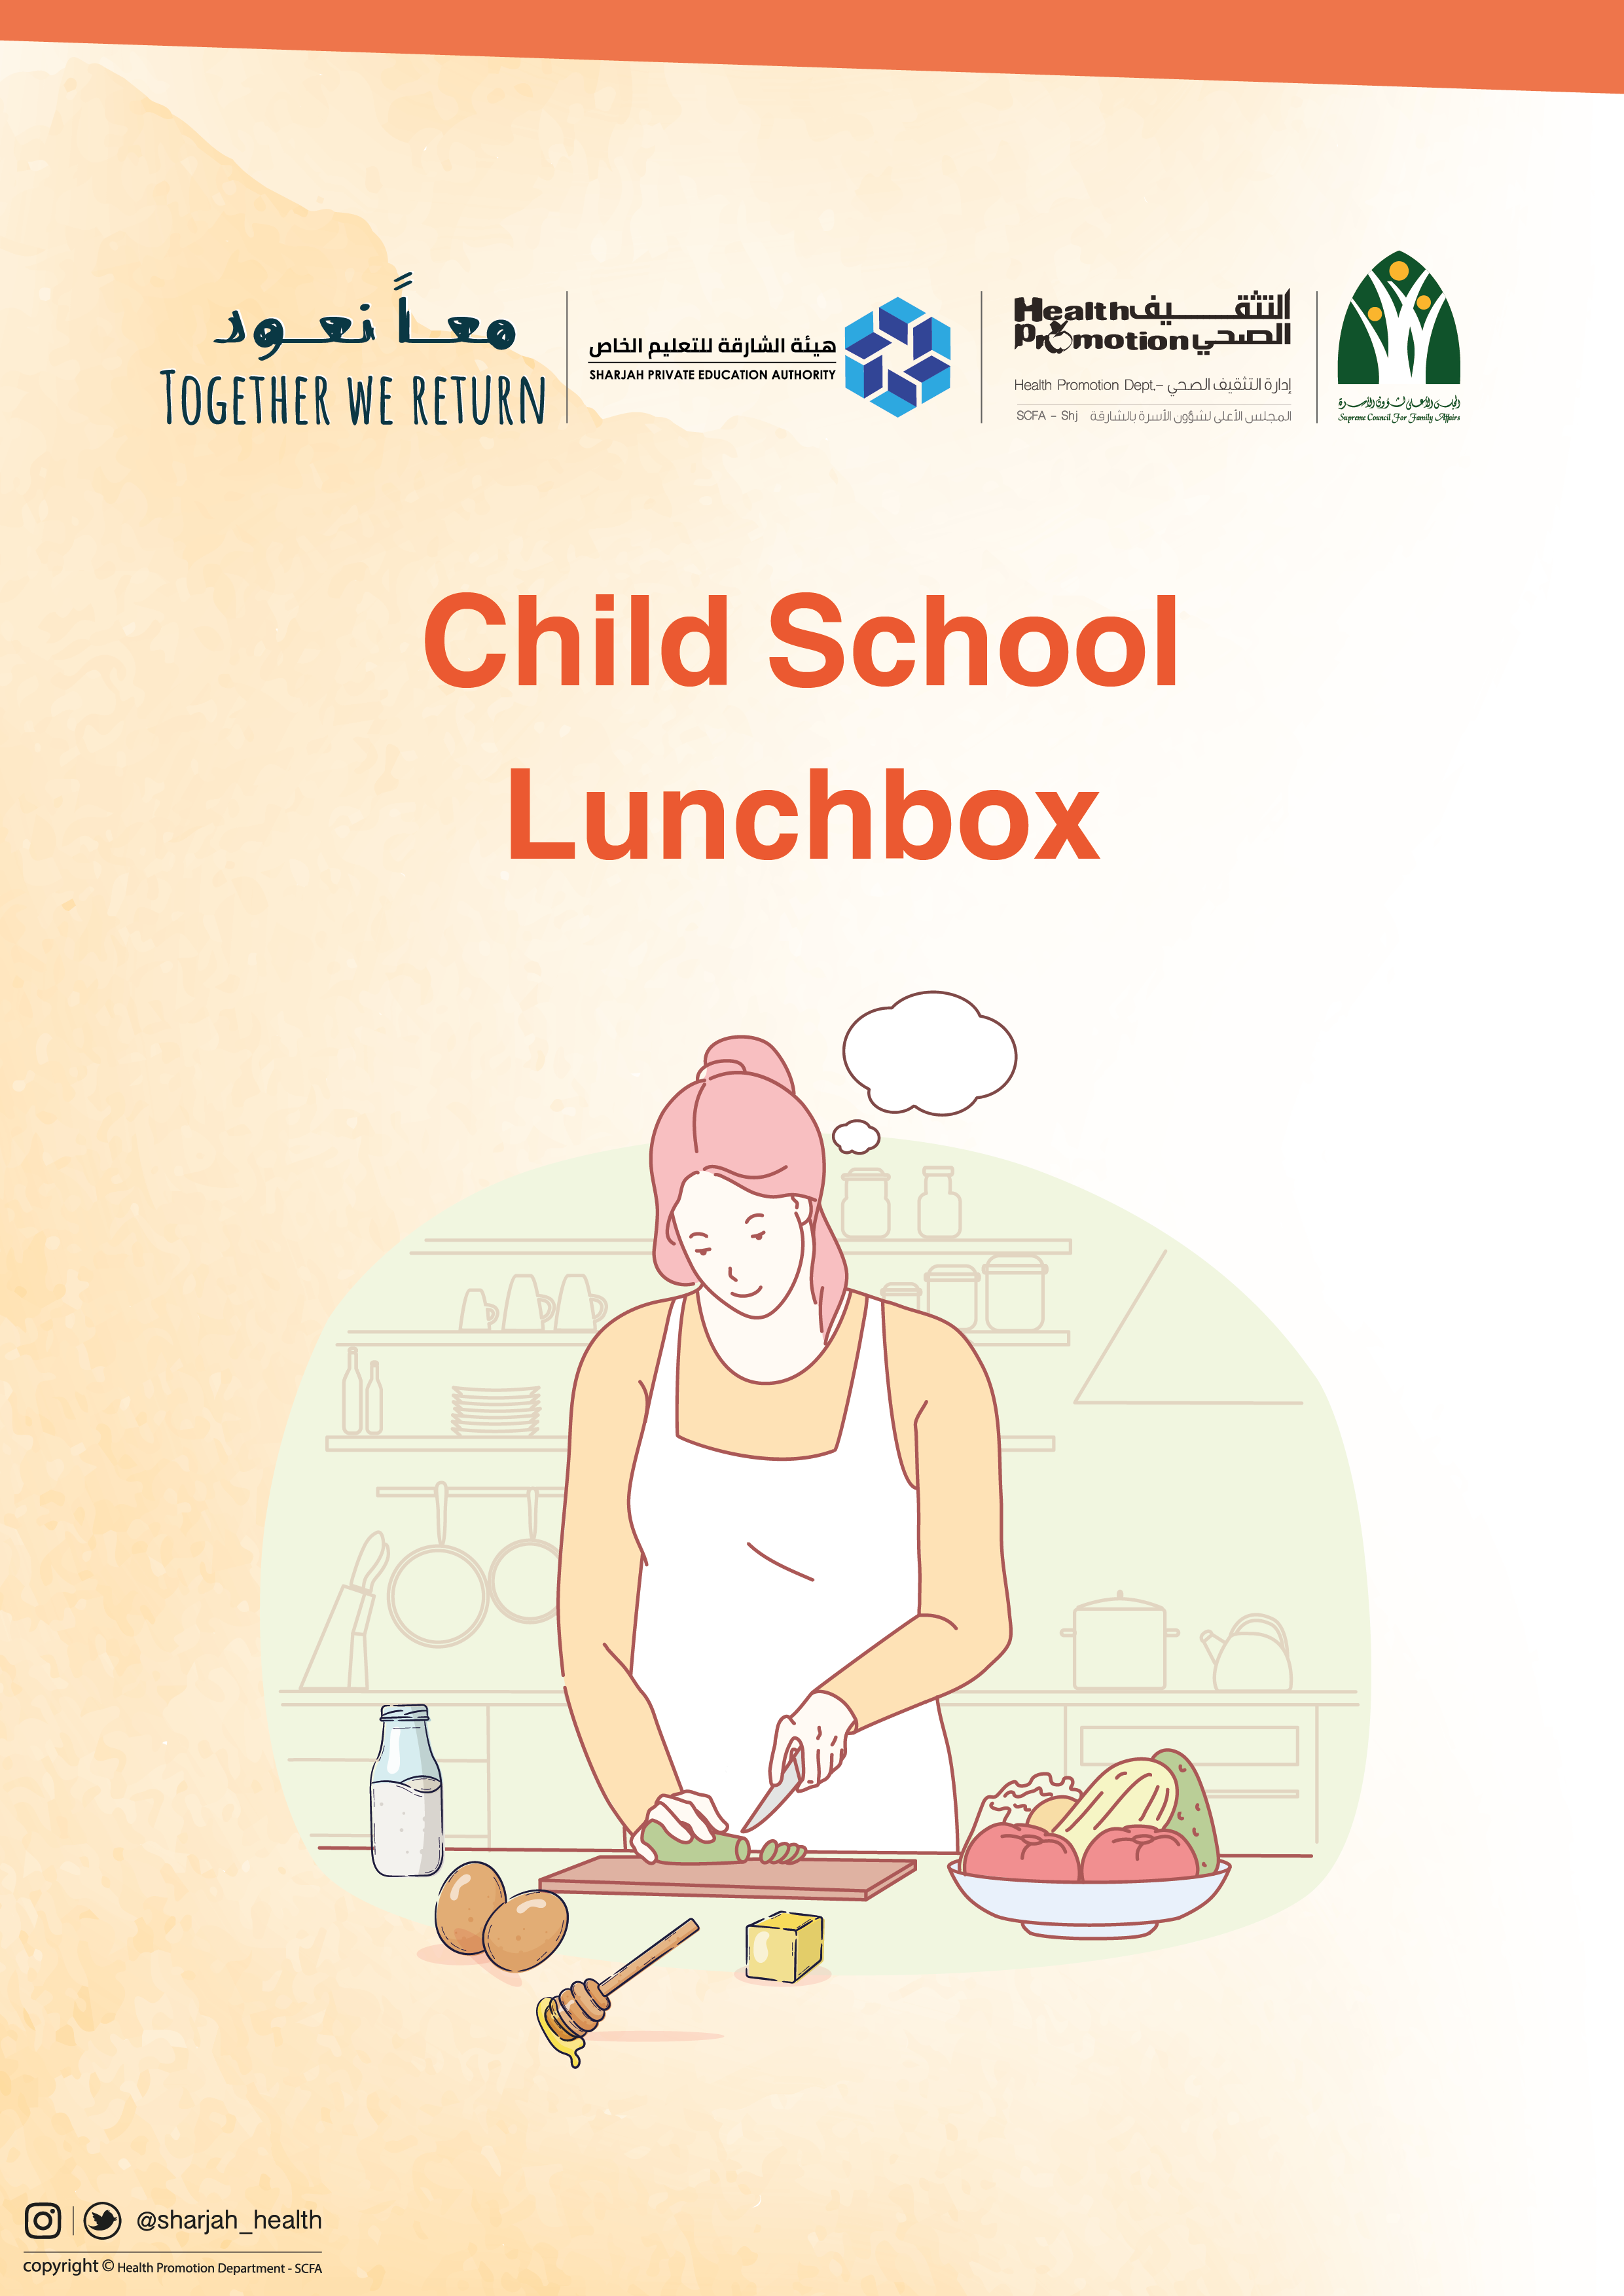 Child School Lunchbox